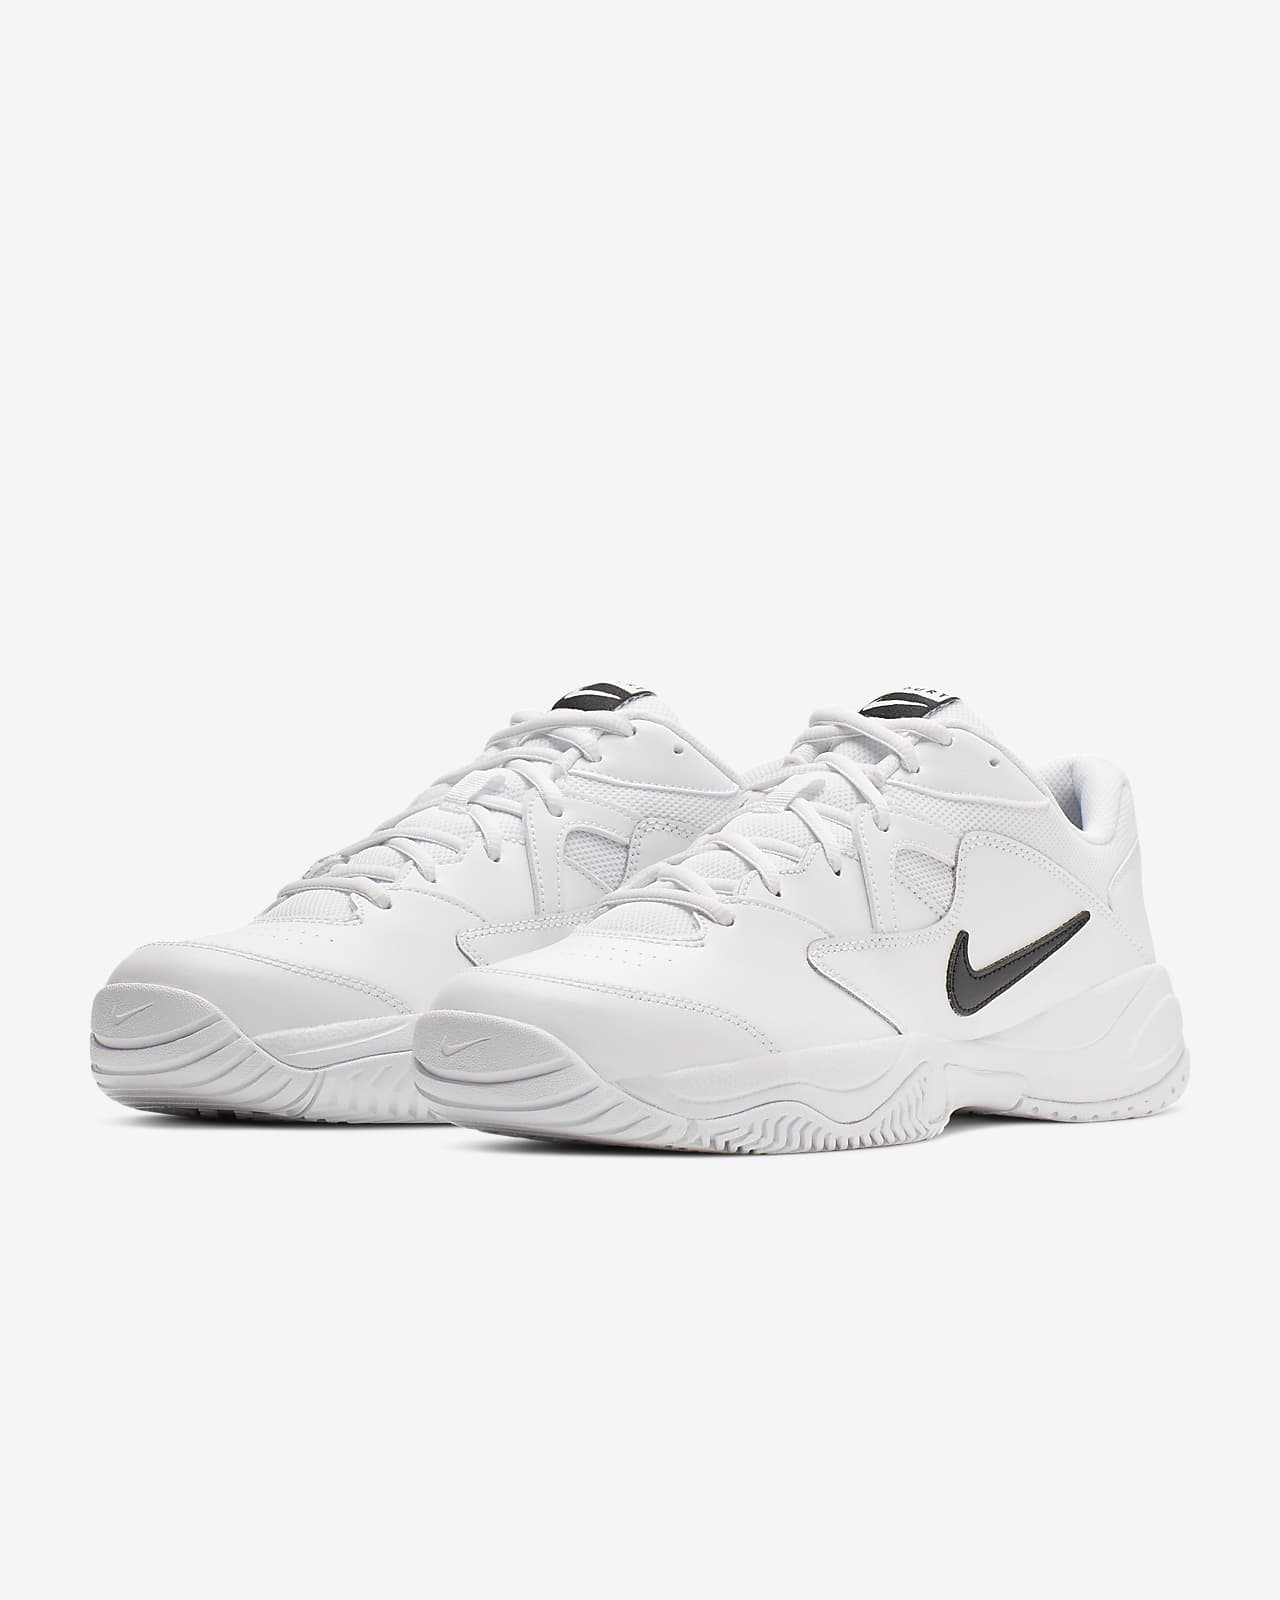 NikeCourt Lite 2 Men's Hard Court Tennis Shoes حليب يزيد الوزن للكبار